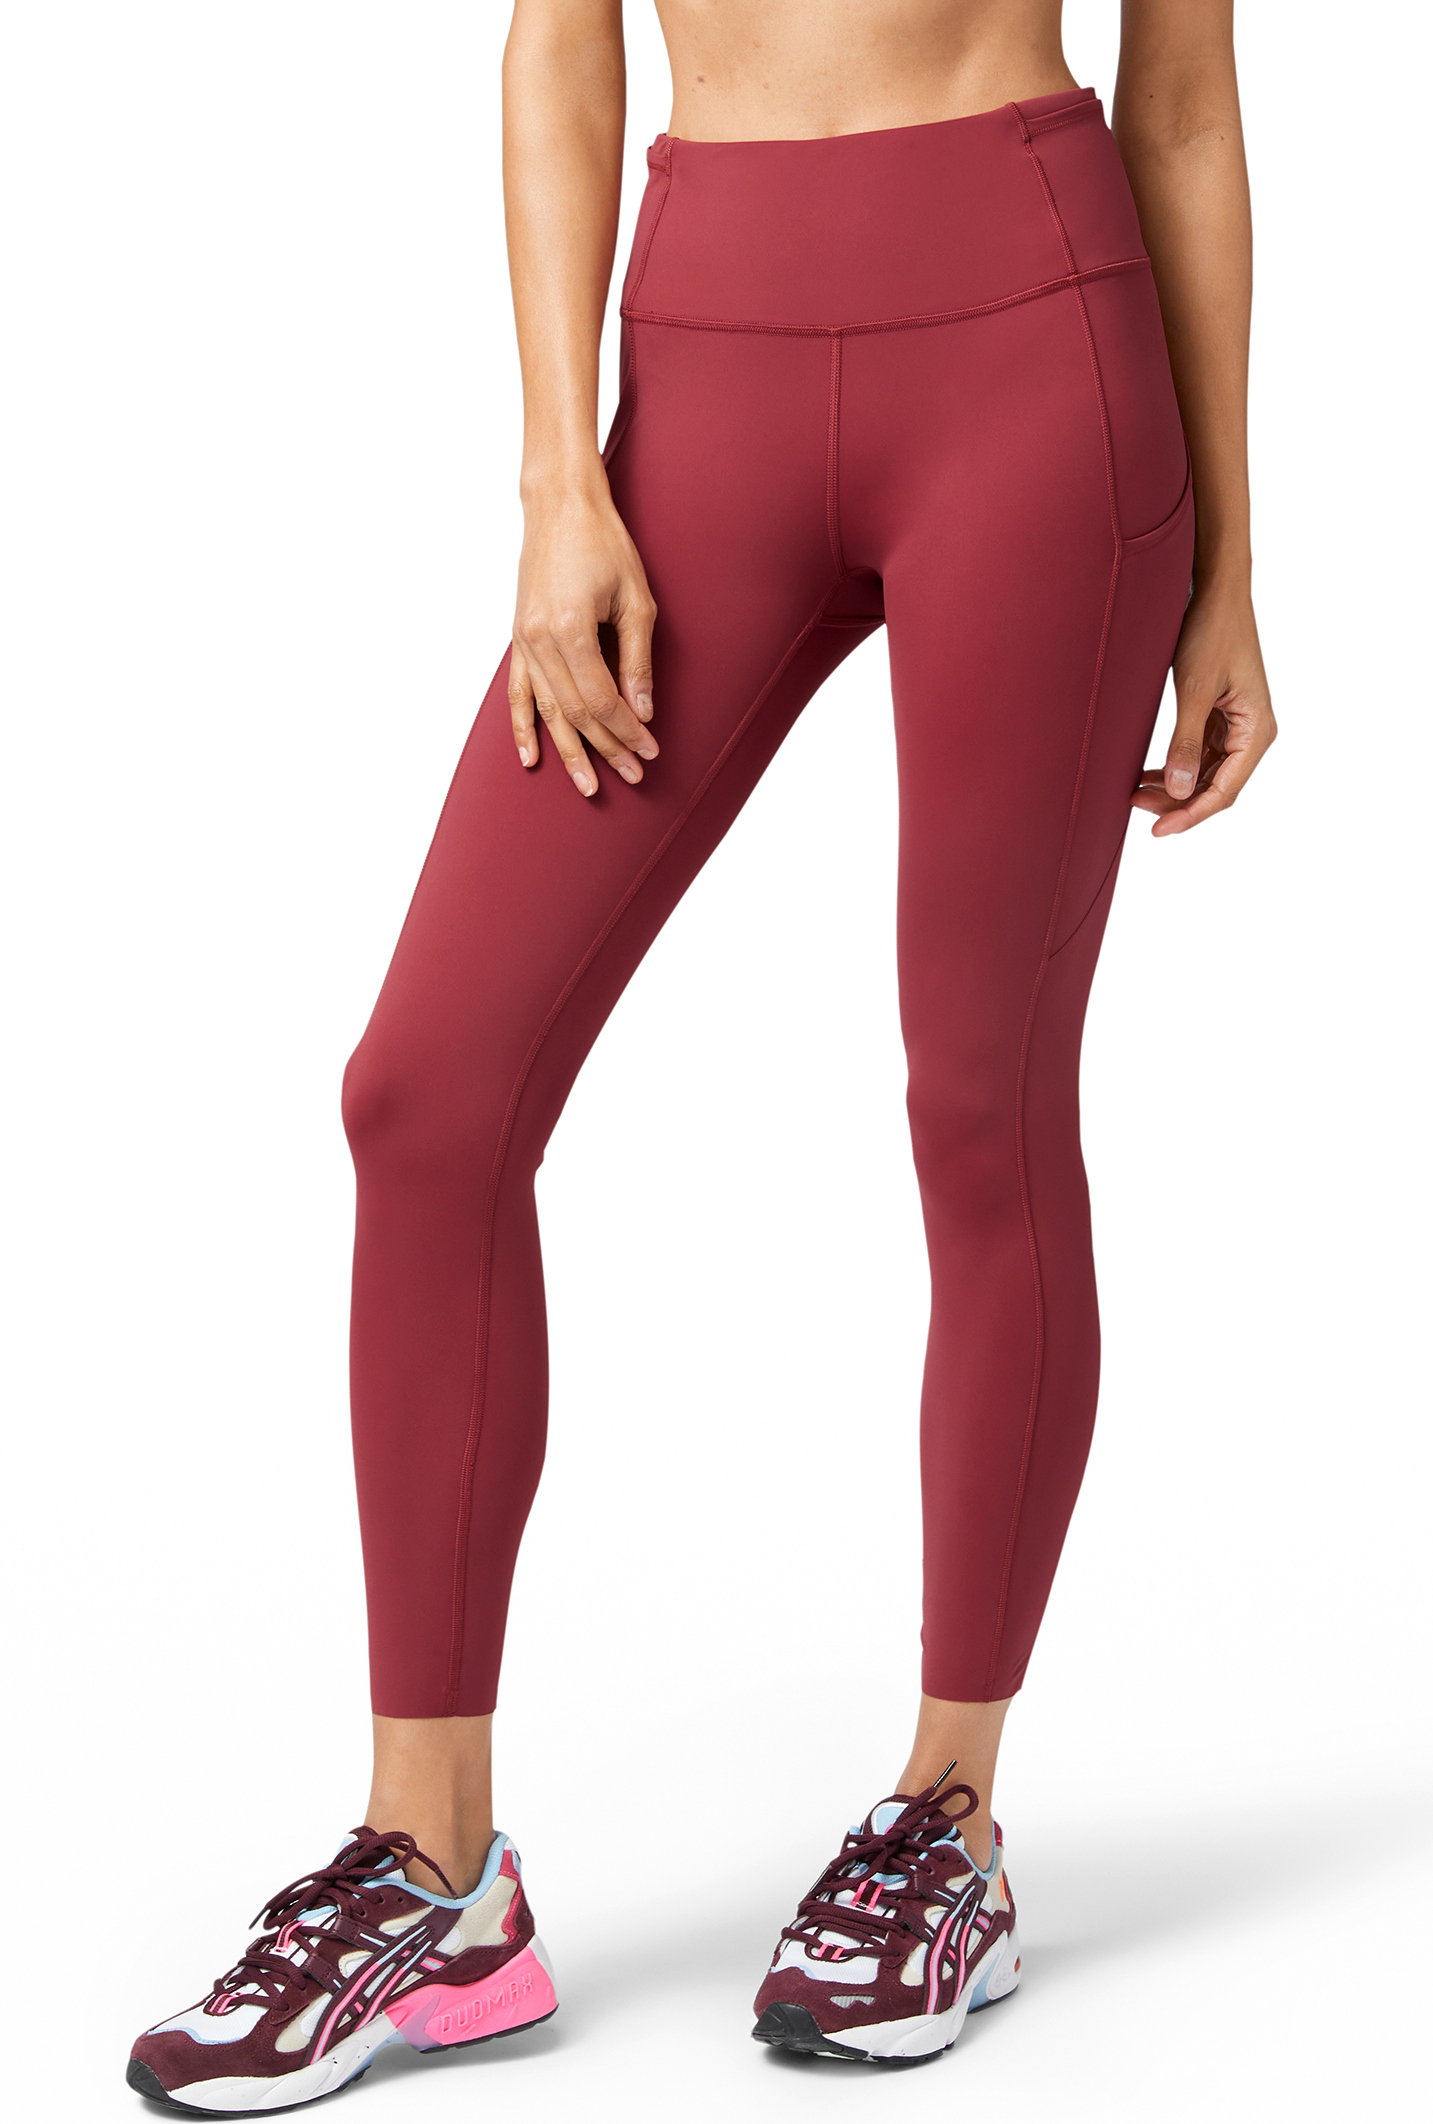 Limsea 2019 Women Workout Tie Dye Print Leggings Fitness Sport Gym Yoga Athletic Pants